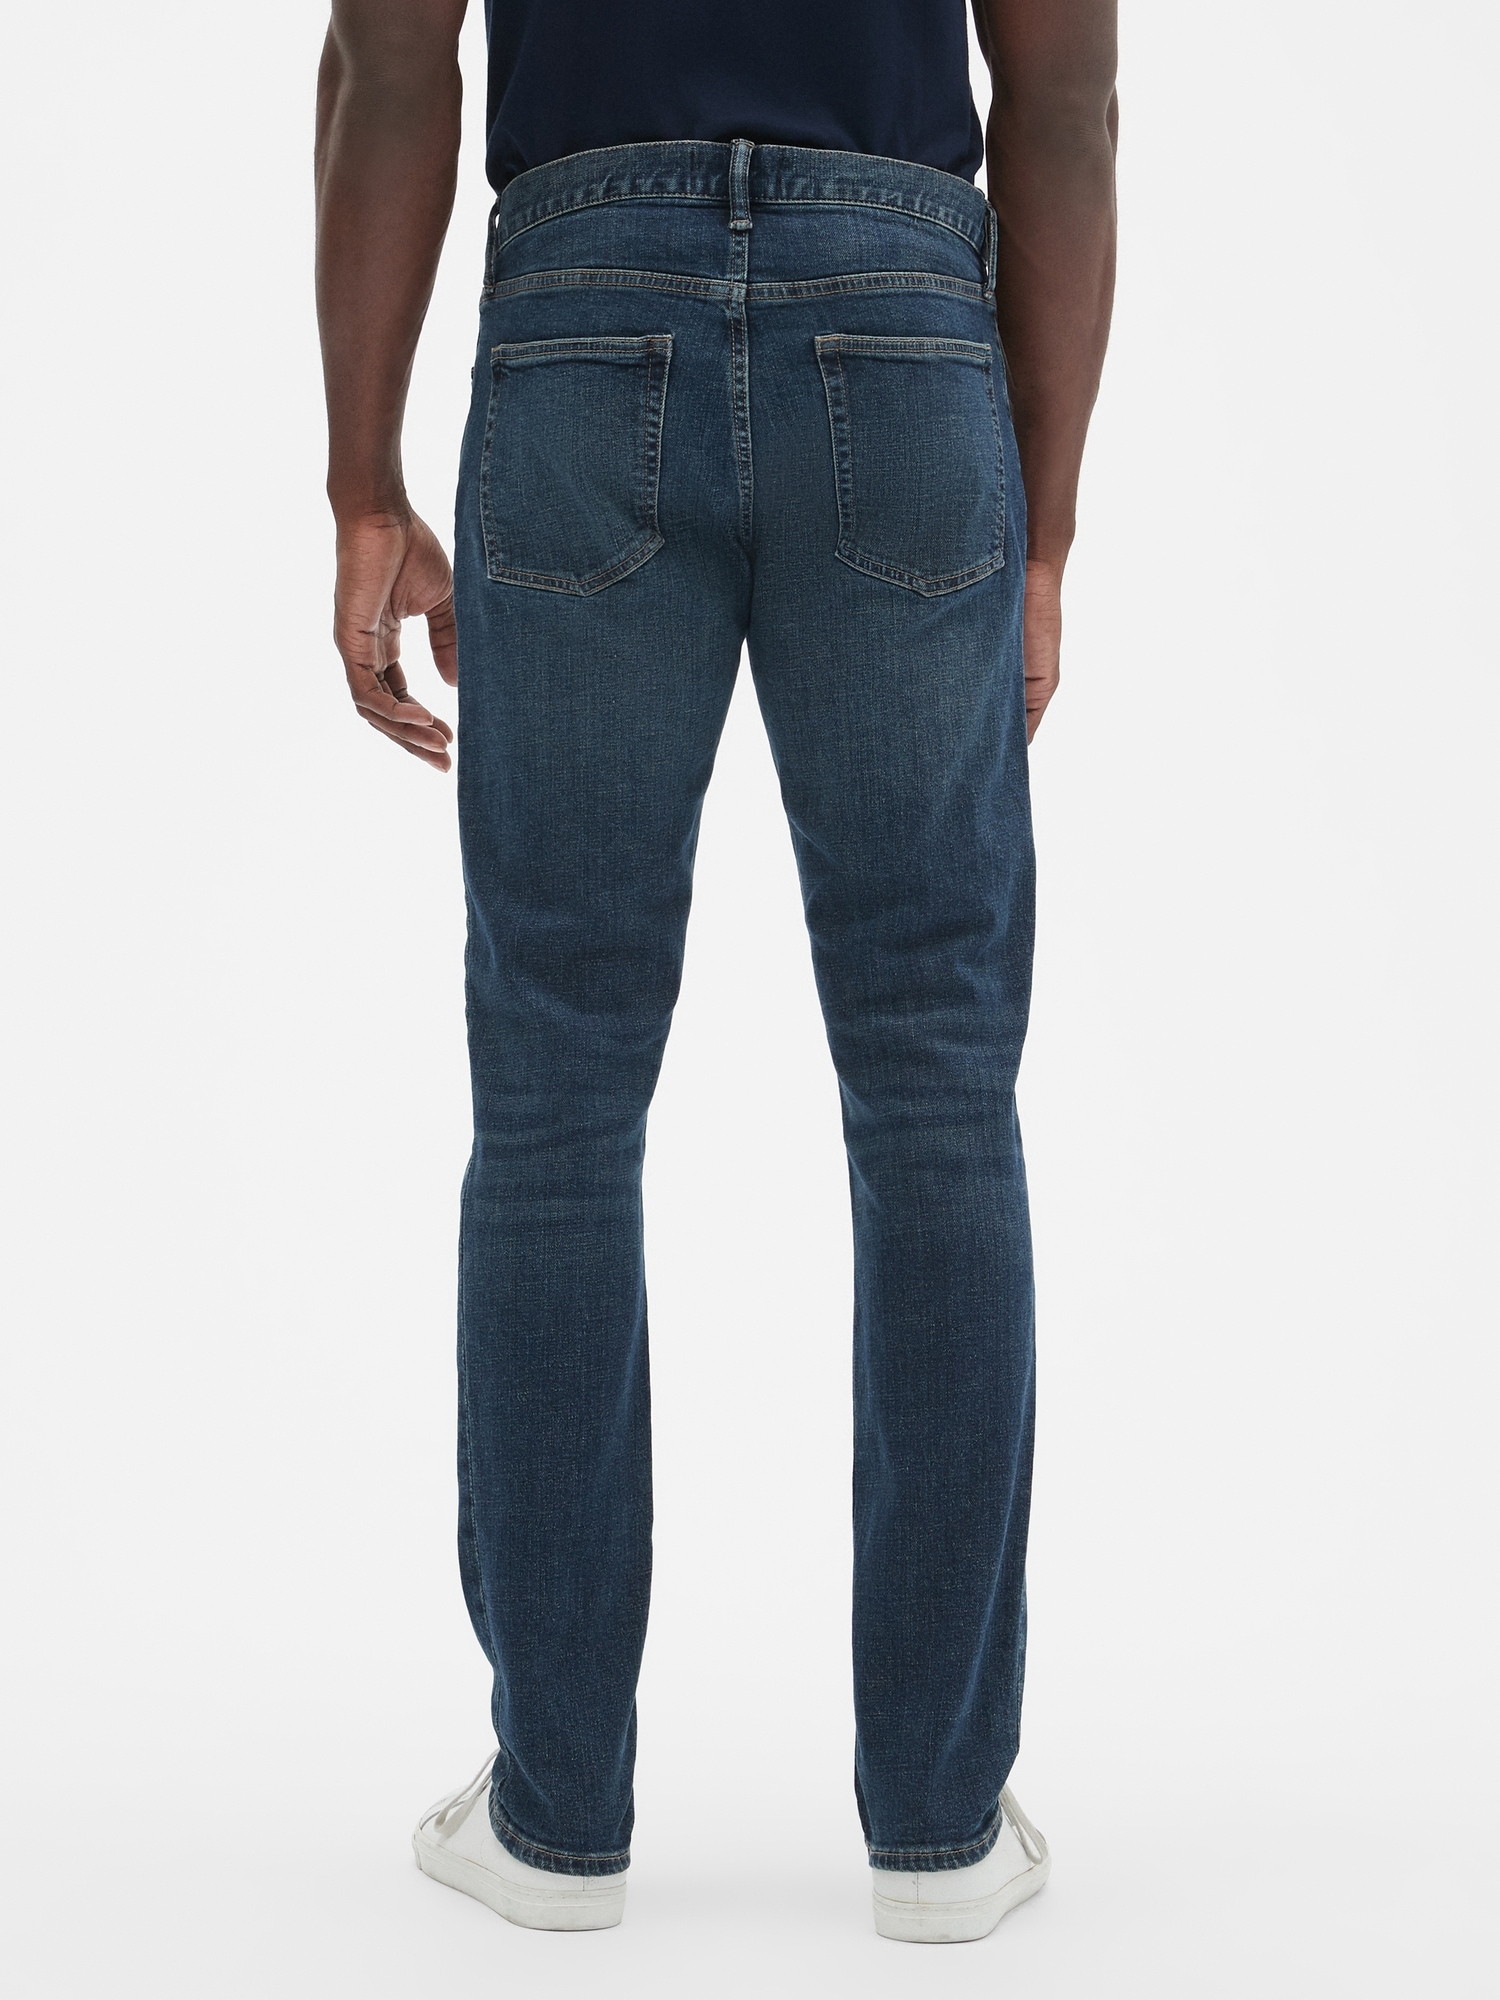 gap indigo jeans